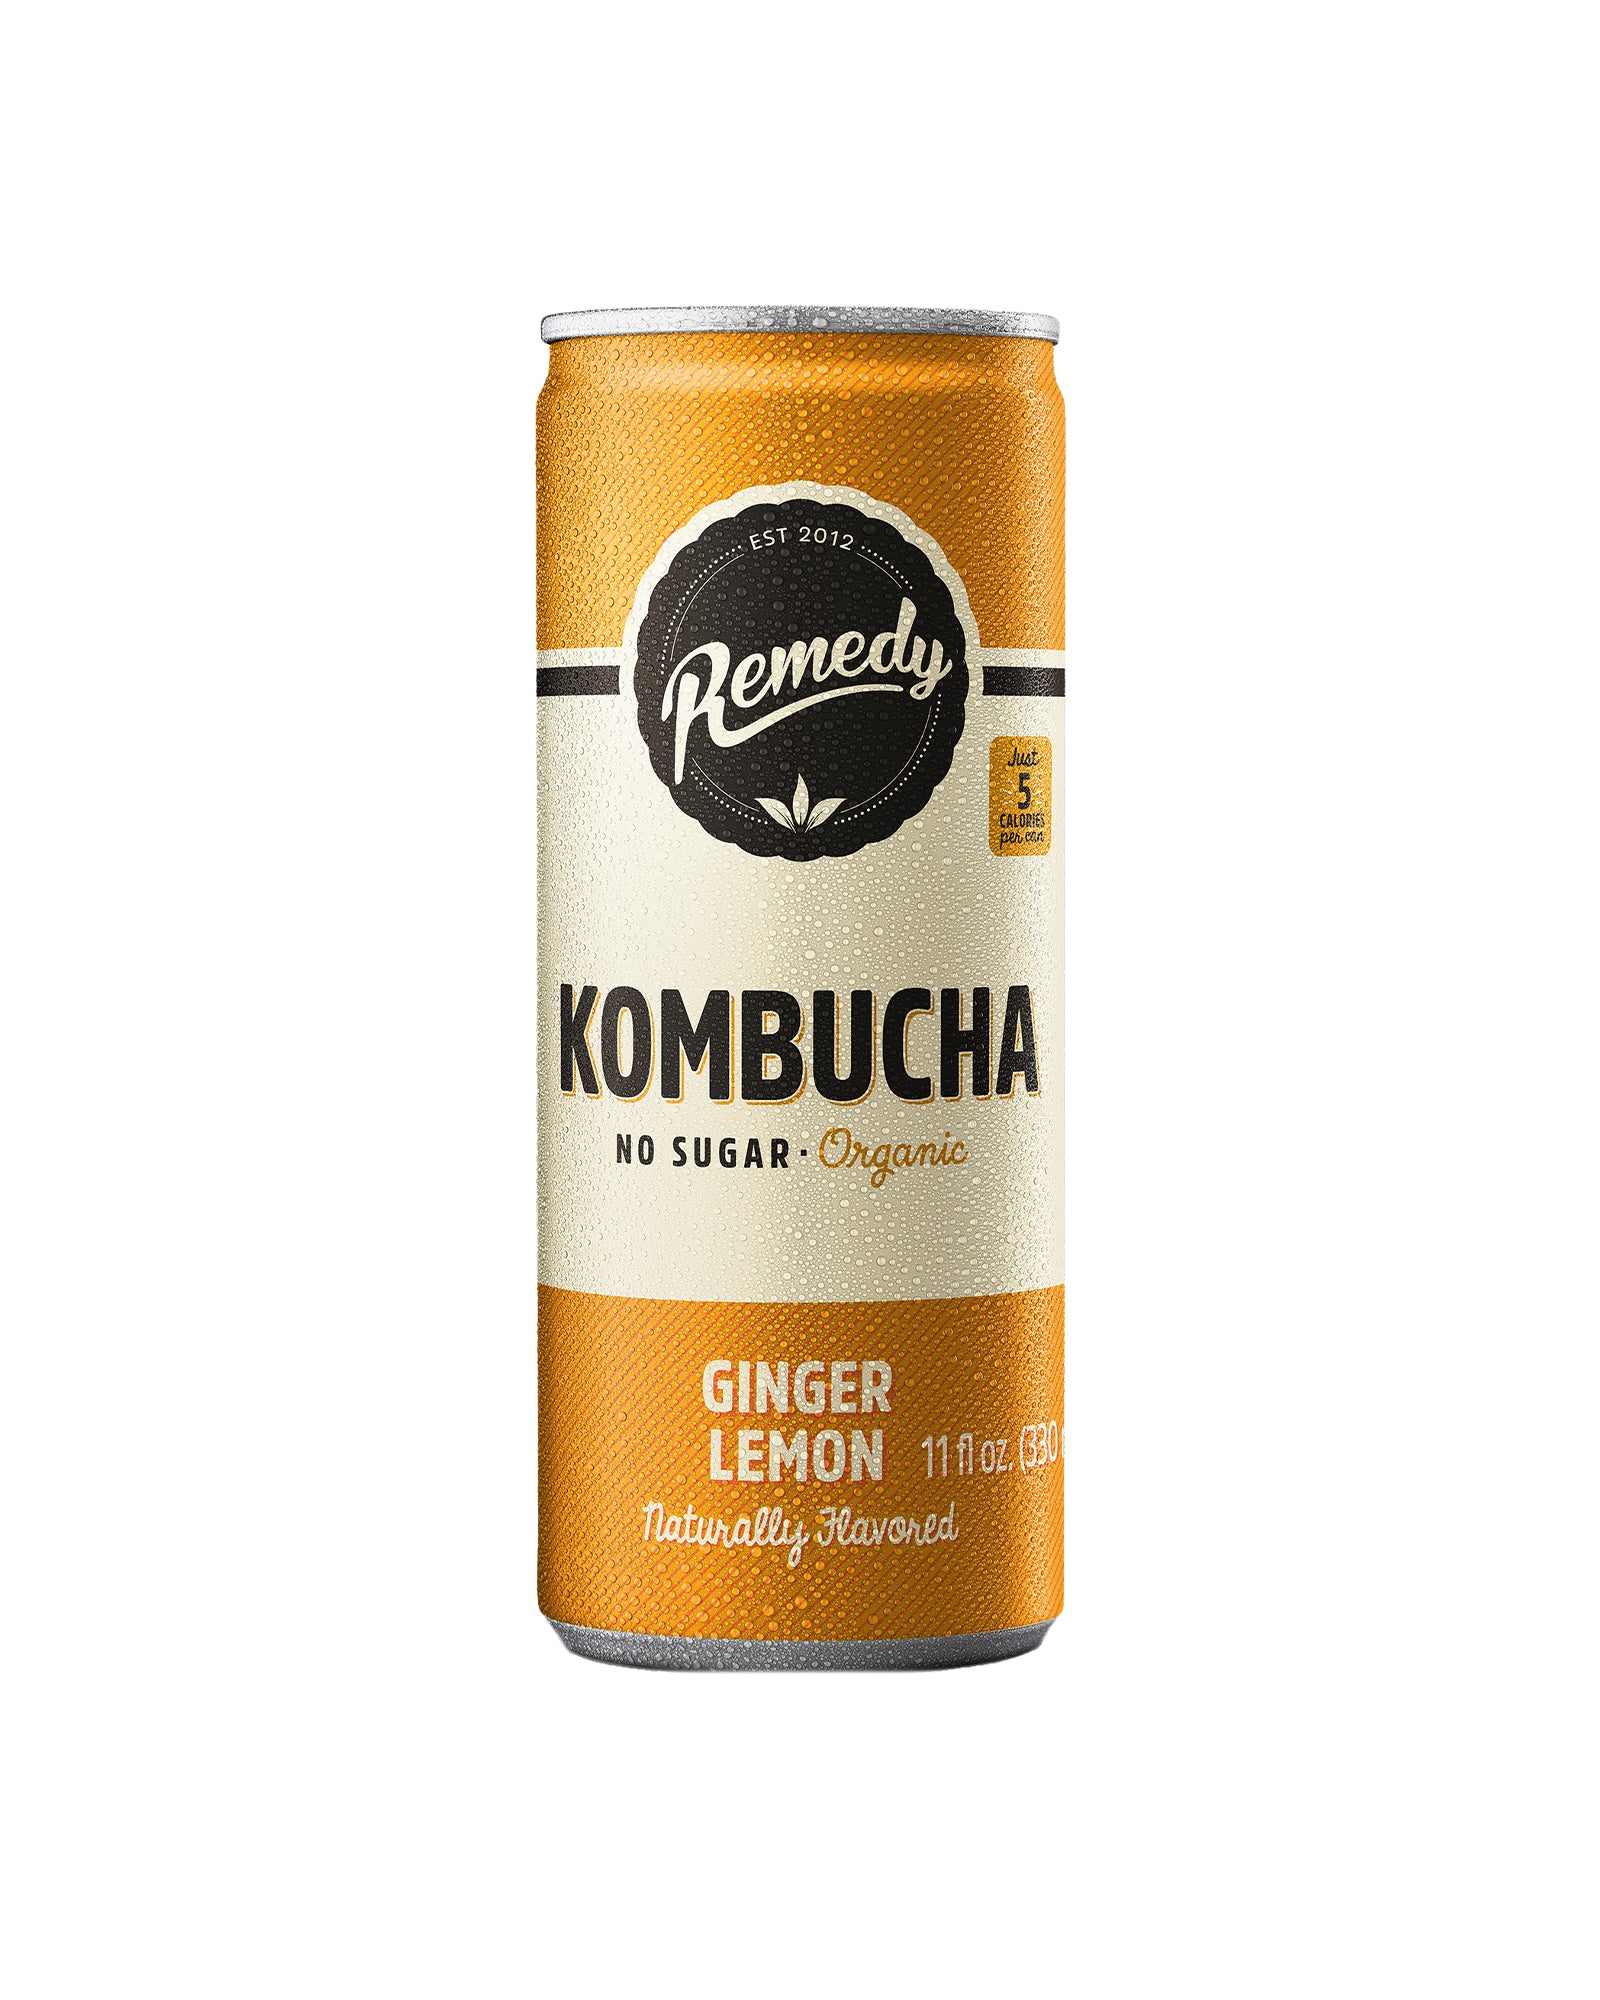 Ginger Lemon Kombucha - Certified Organic Remedy Kombucha